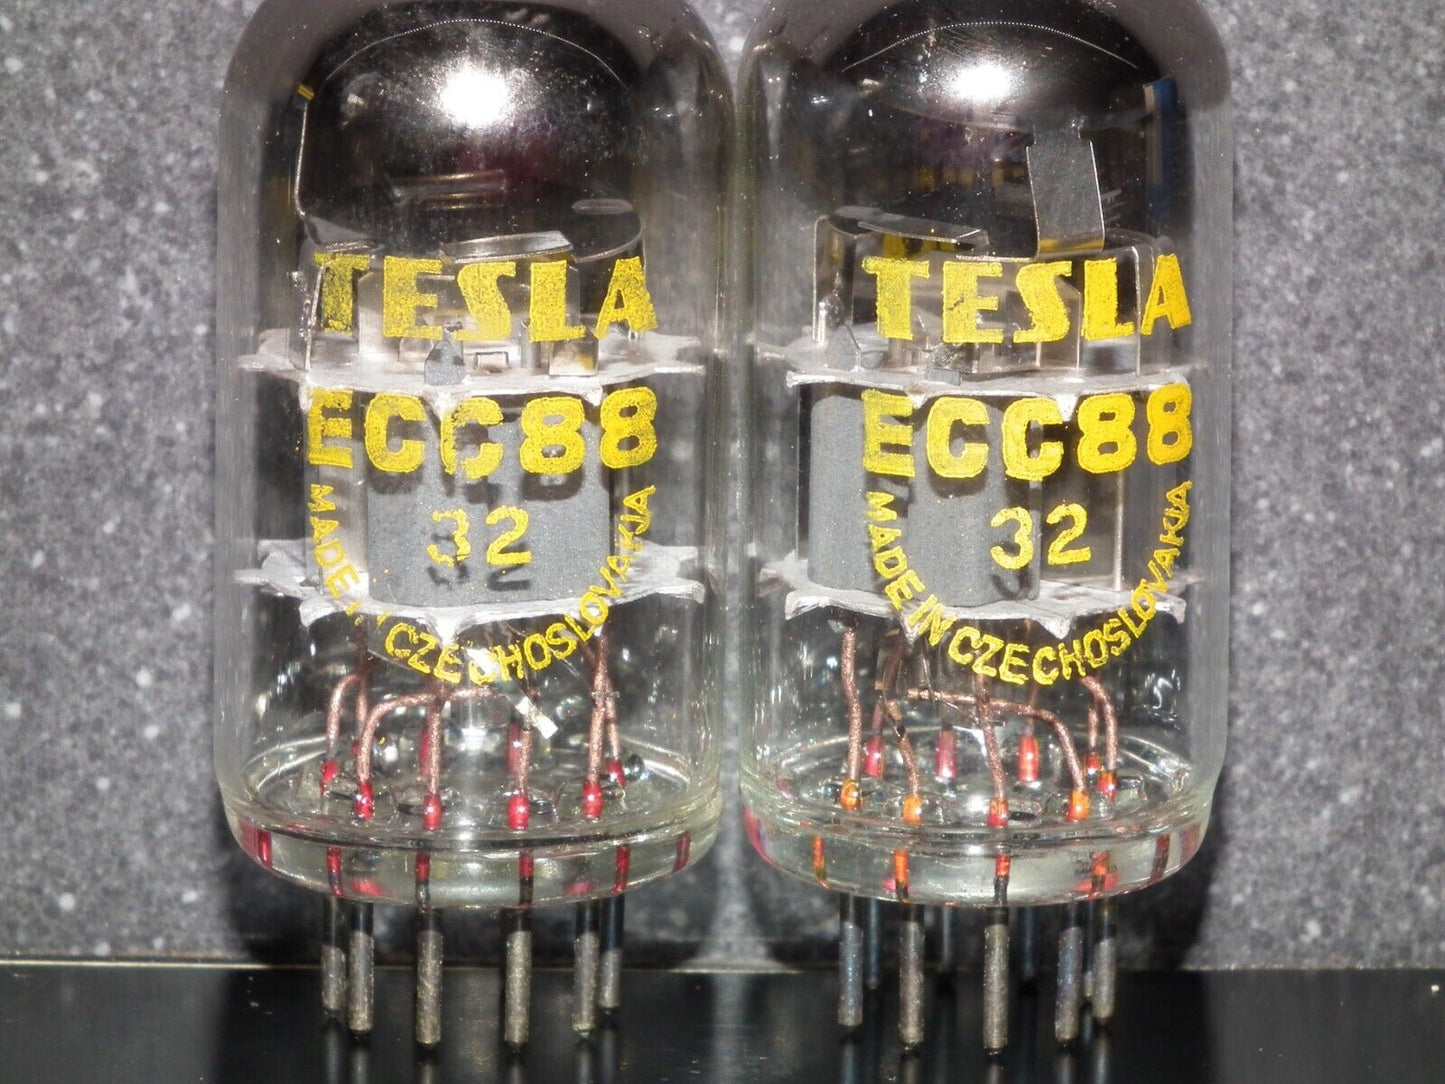 ECC88 Tesla 6DJ8 Czechoslovakia NOS NIB Platinum matched pair Rozhnov plant